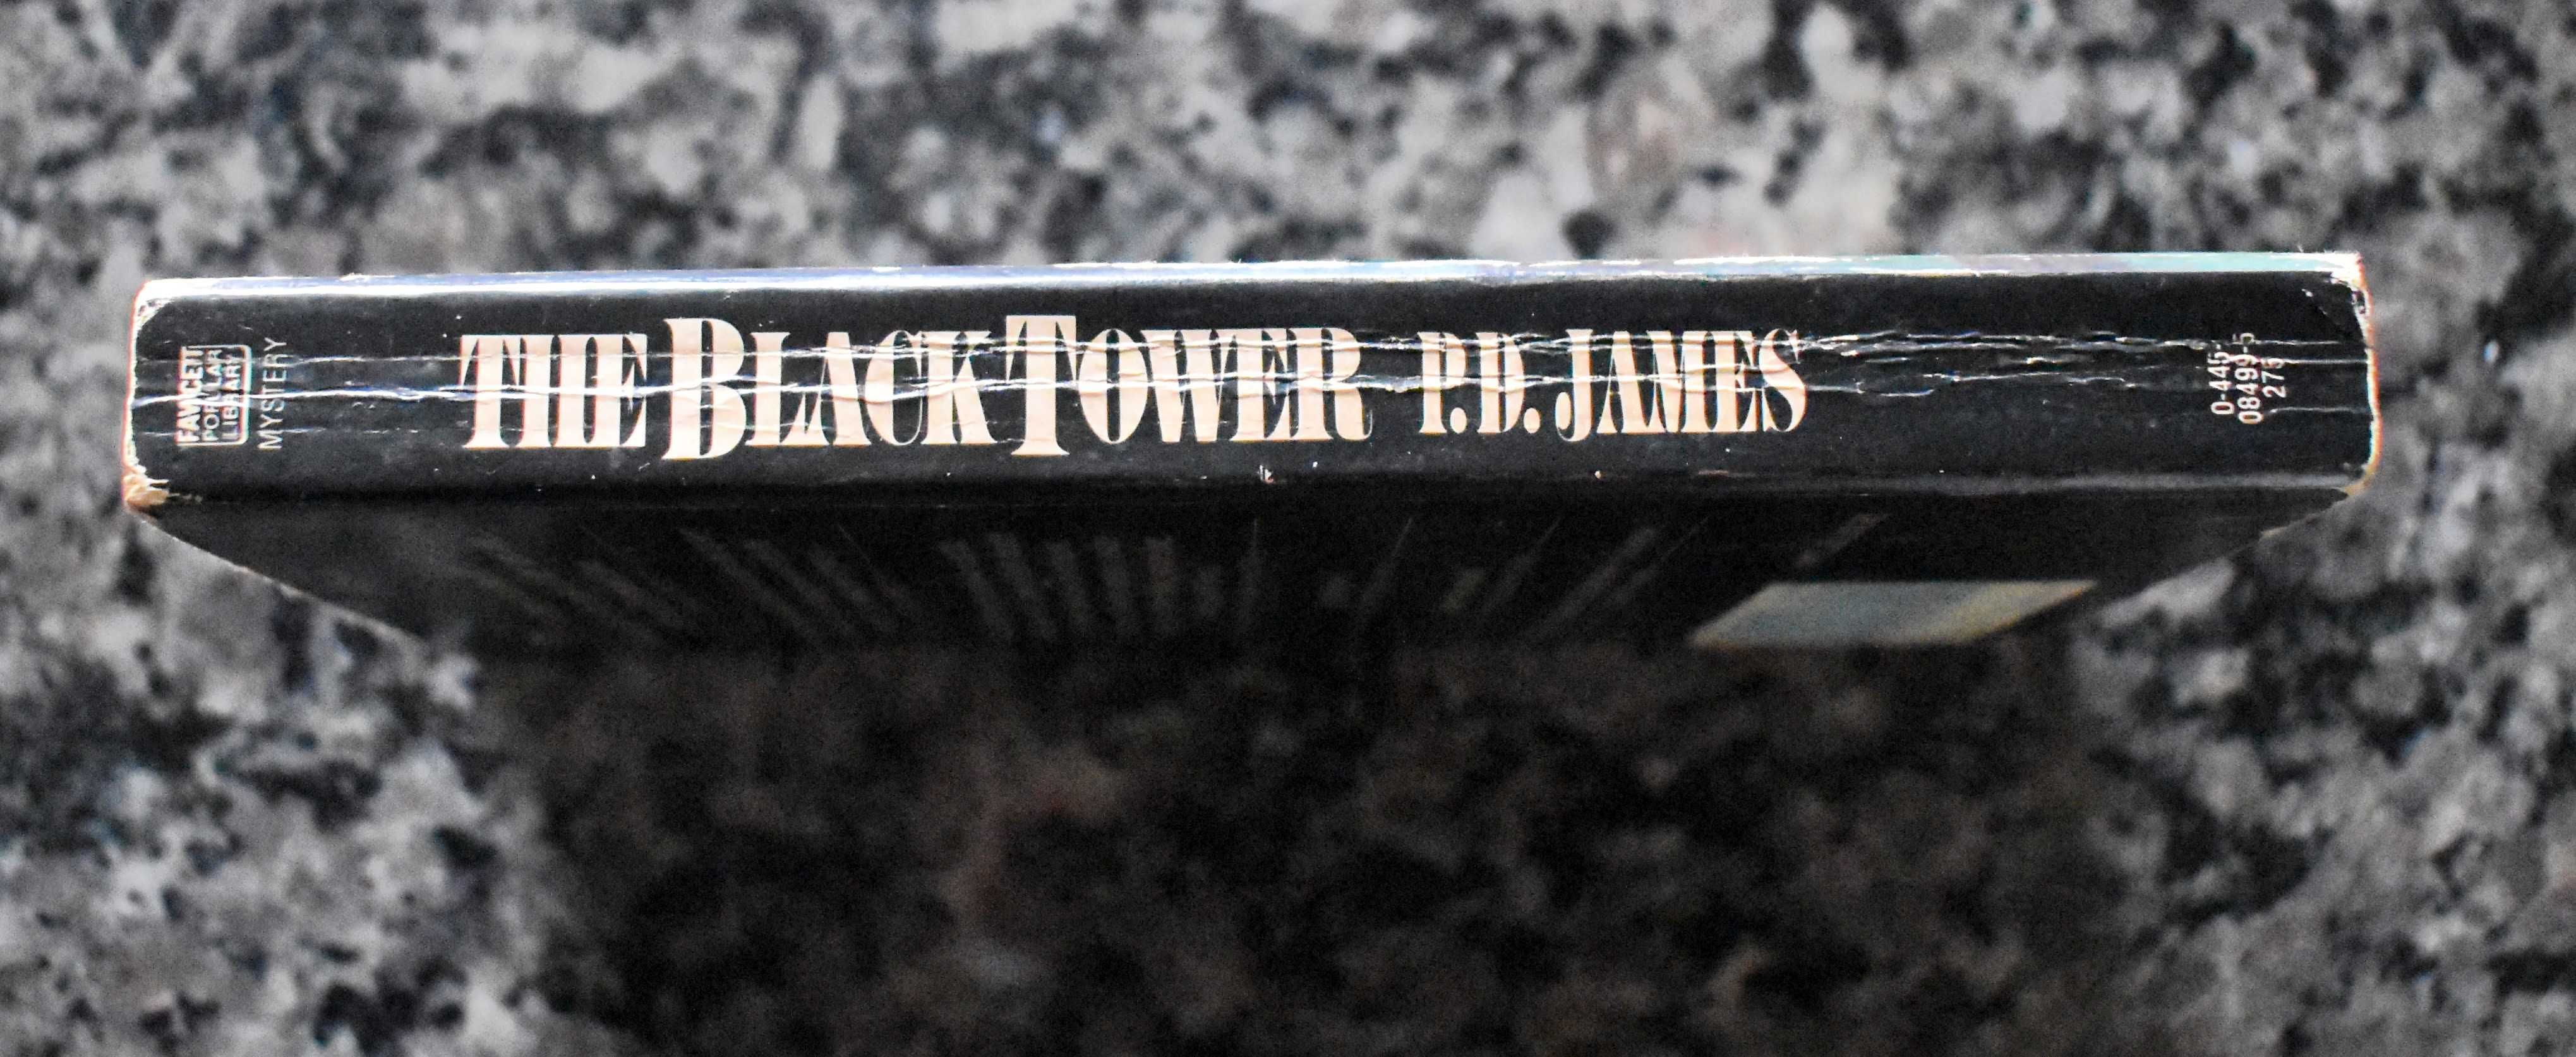 P.D. James - The Black Tower